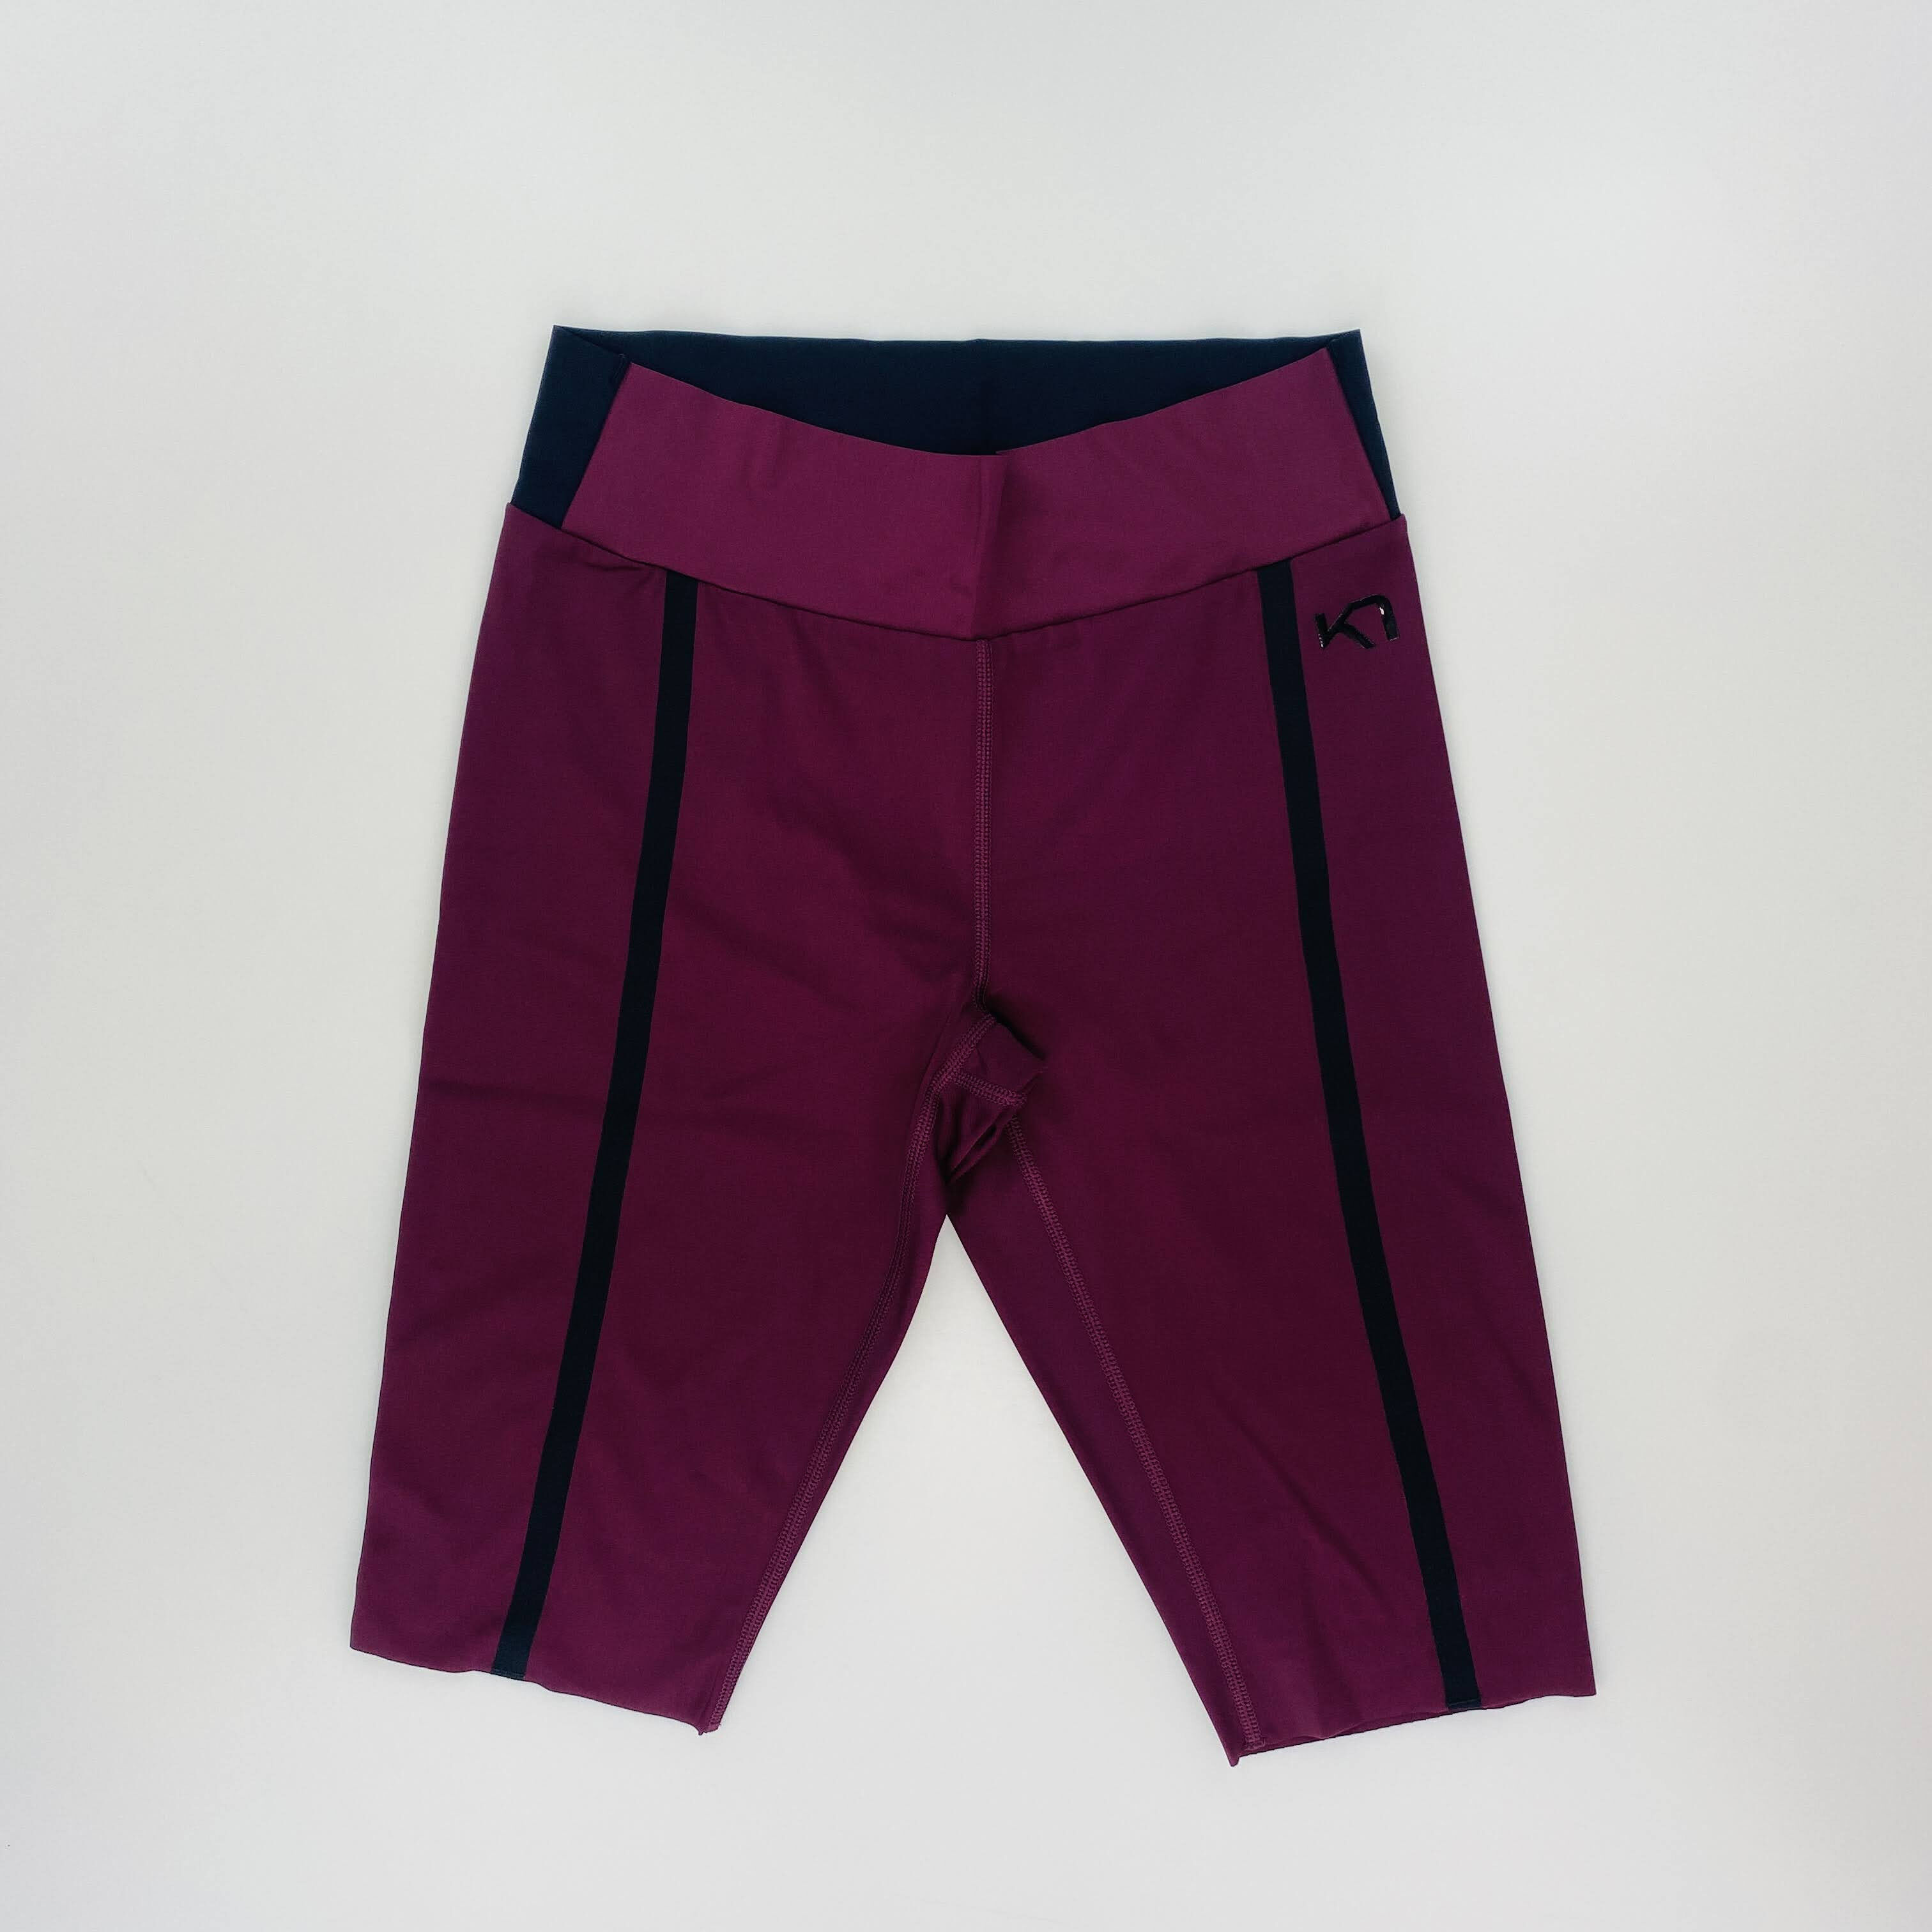 Kari Traa Sigrun L Shorts - Second Hand Shorts - Women's - Purple - M | Hardloop